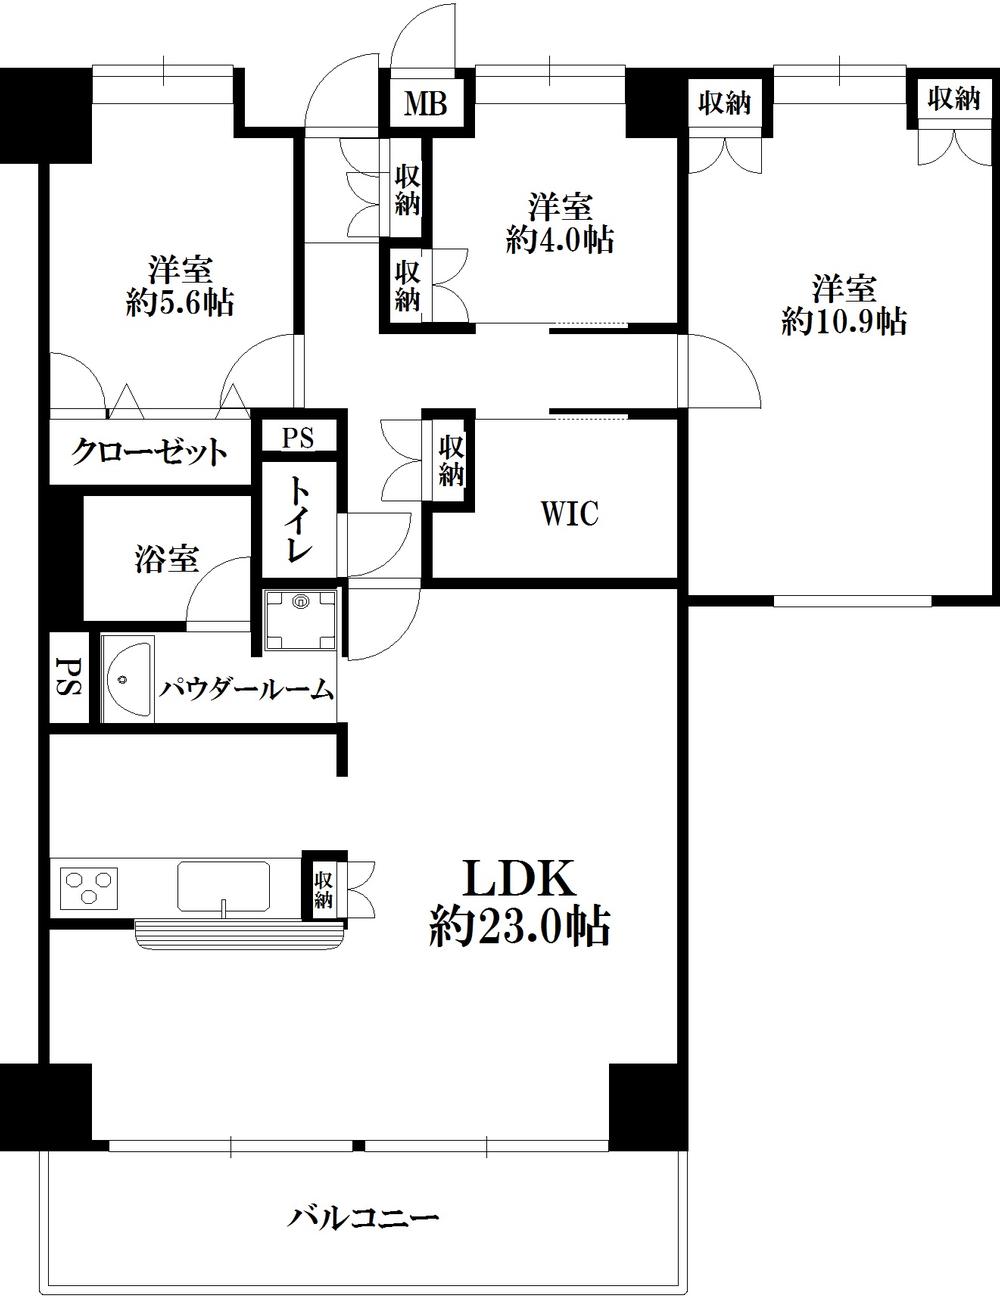 Floor plan. 3LDK + S (storeroom), Price 52,800,000 yen, Occupied area 98.56 sq m , Balcony area 10.9 sq m